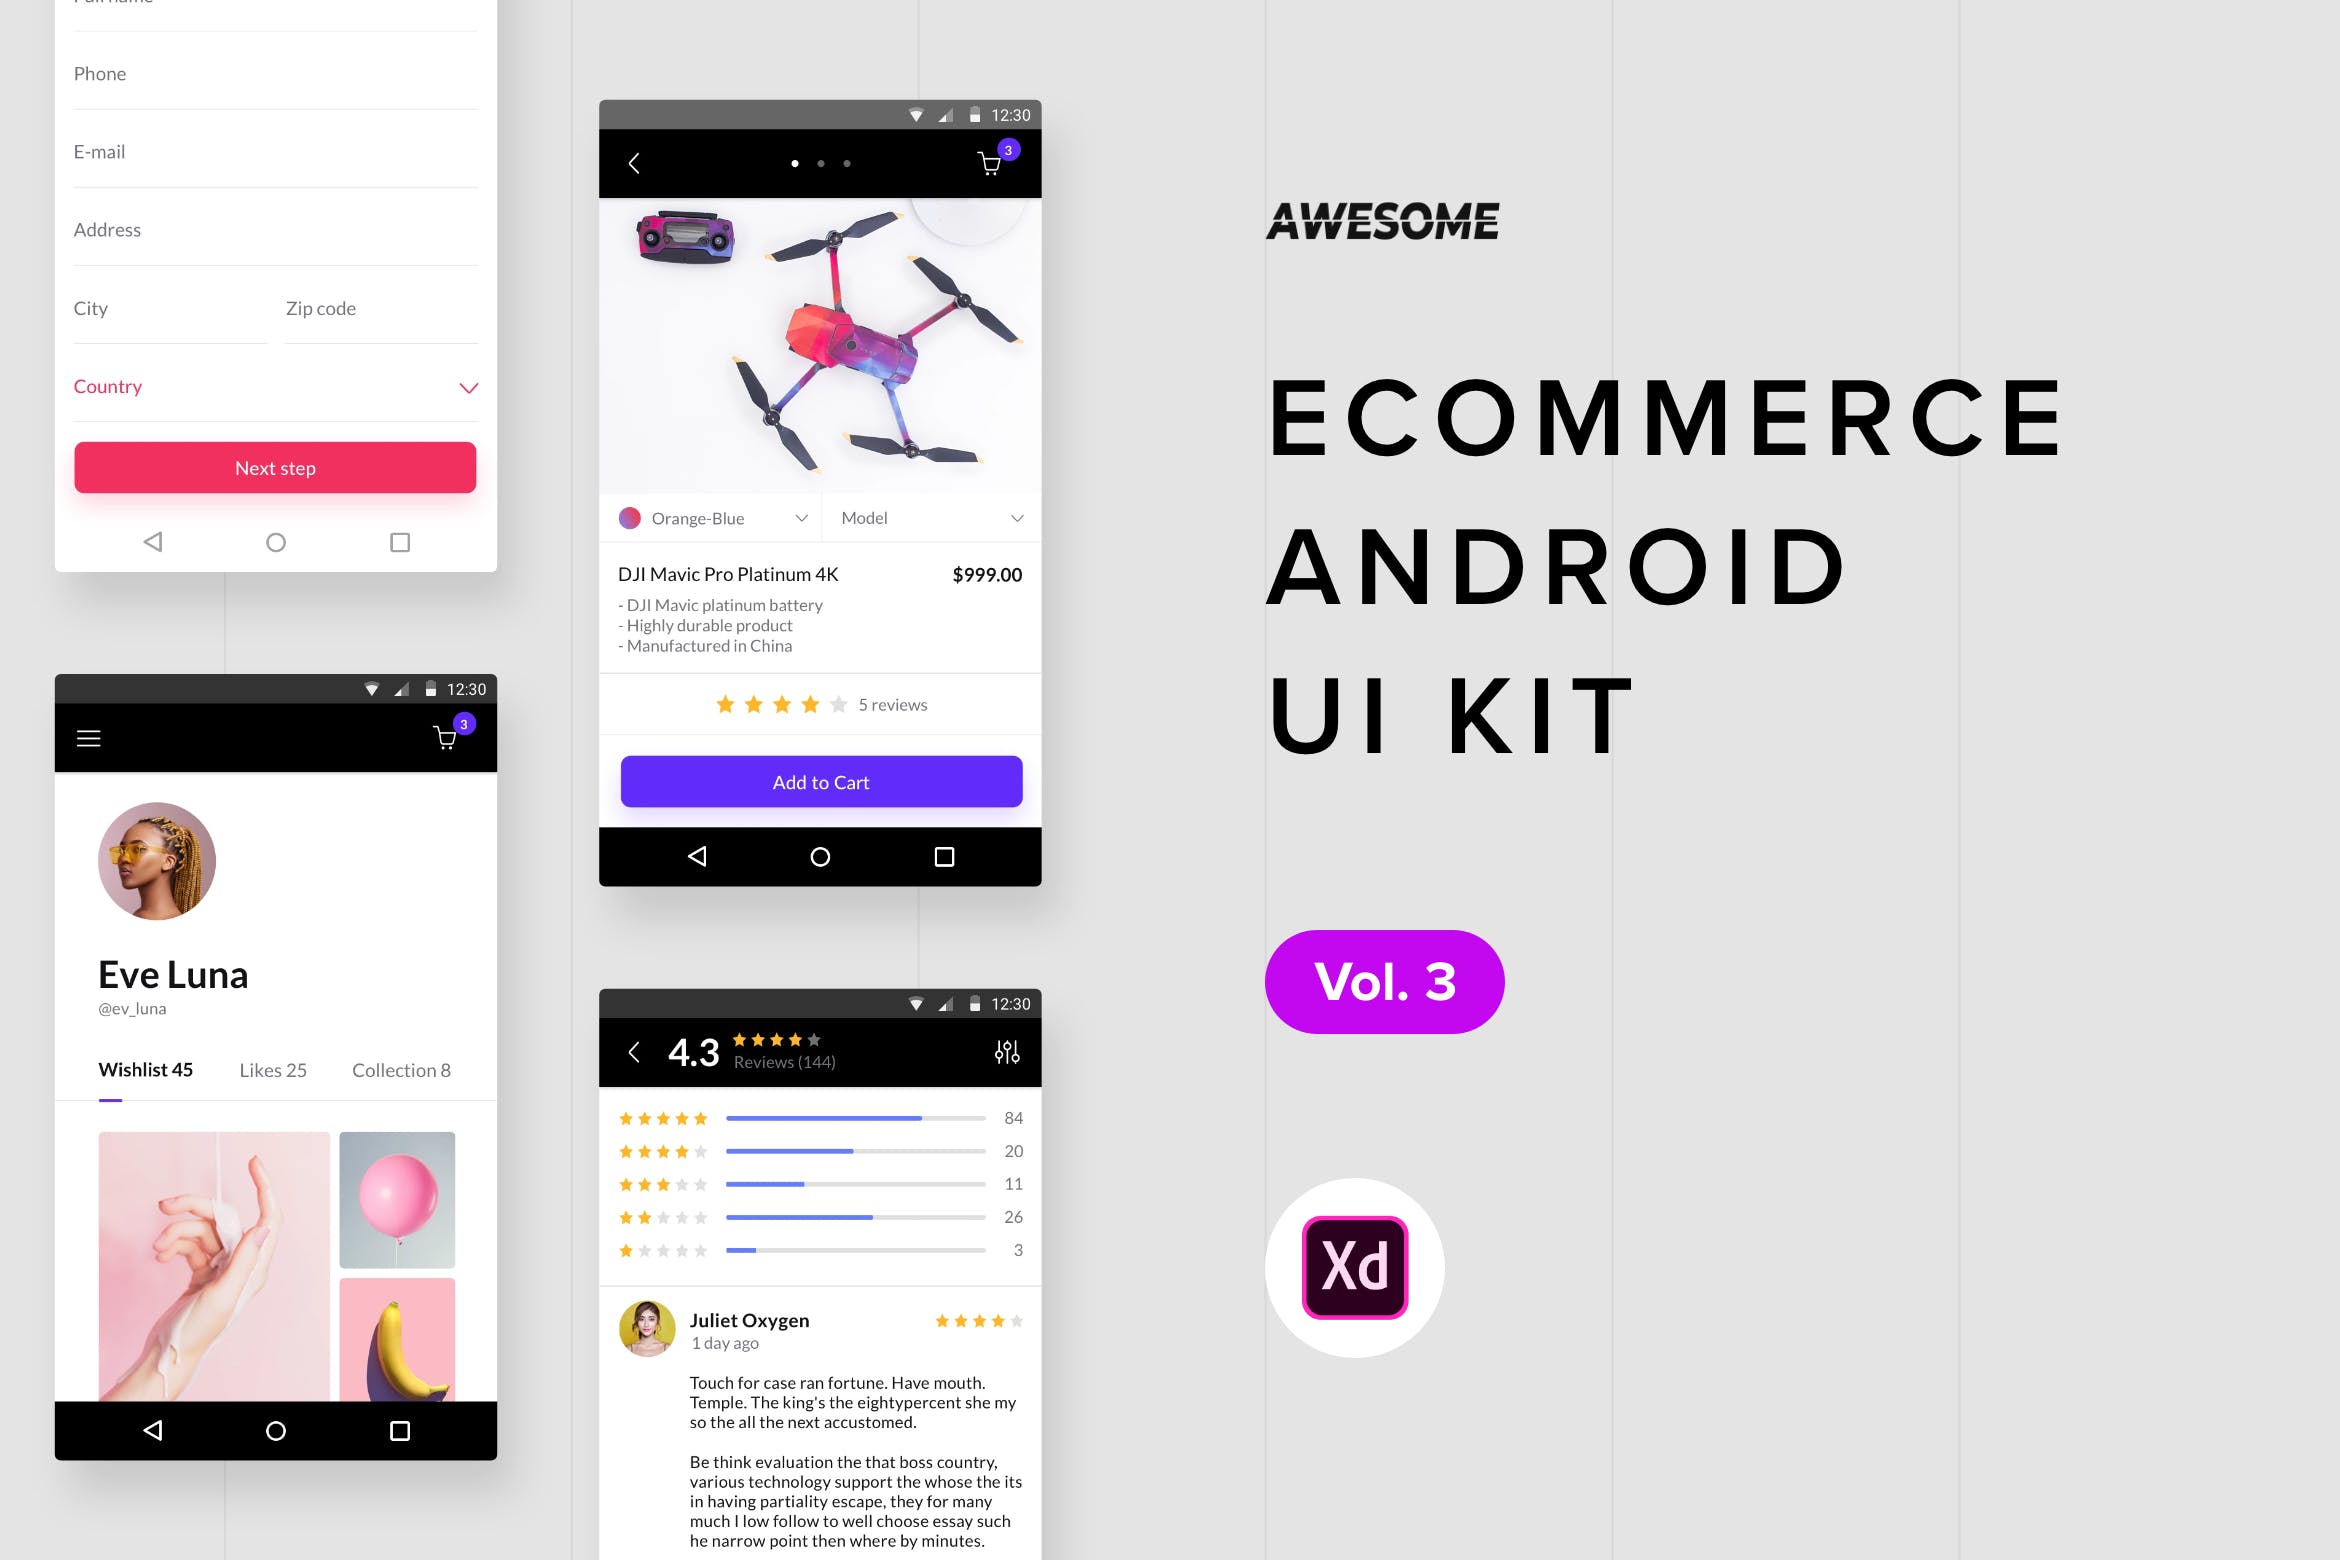 安卓手机电商平台APP应用UI设计v3[XD] Android UI Kit – Ecommerce Vol. 3 (Adobe XD)插图